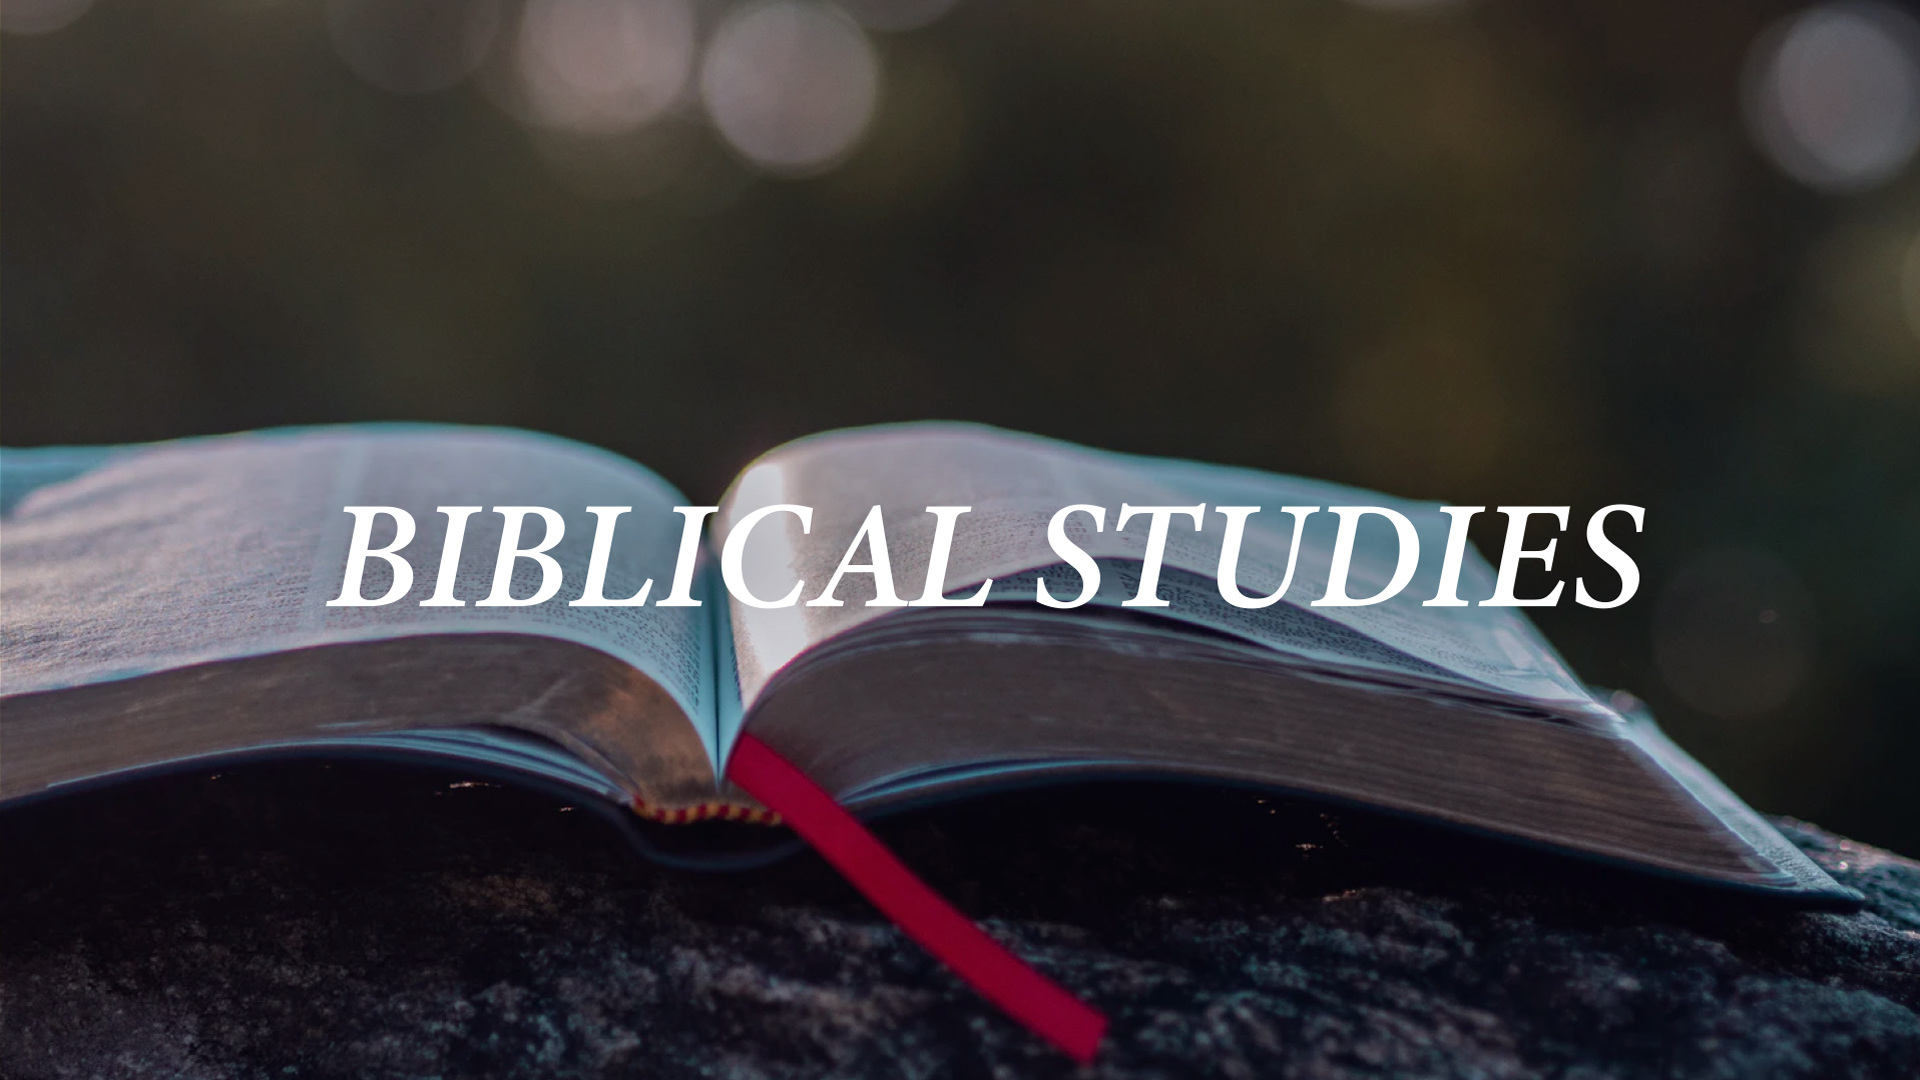 Category: Biblical Studies